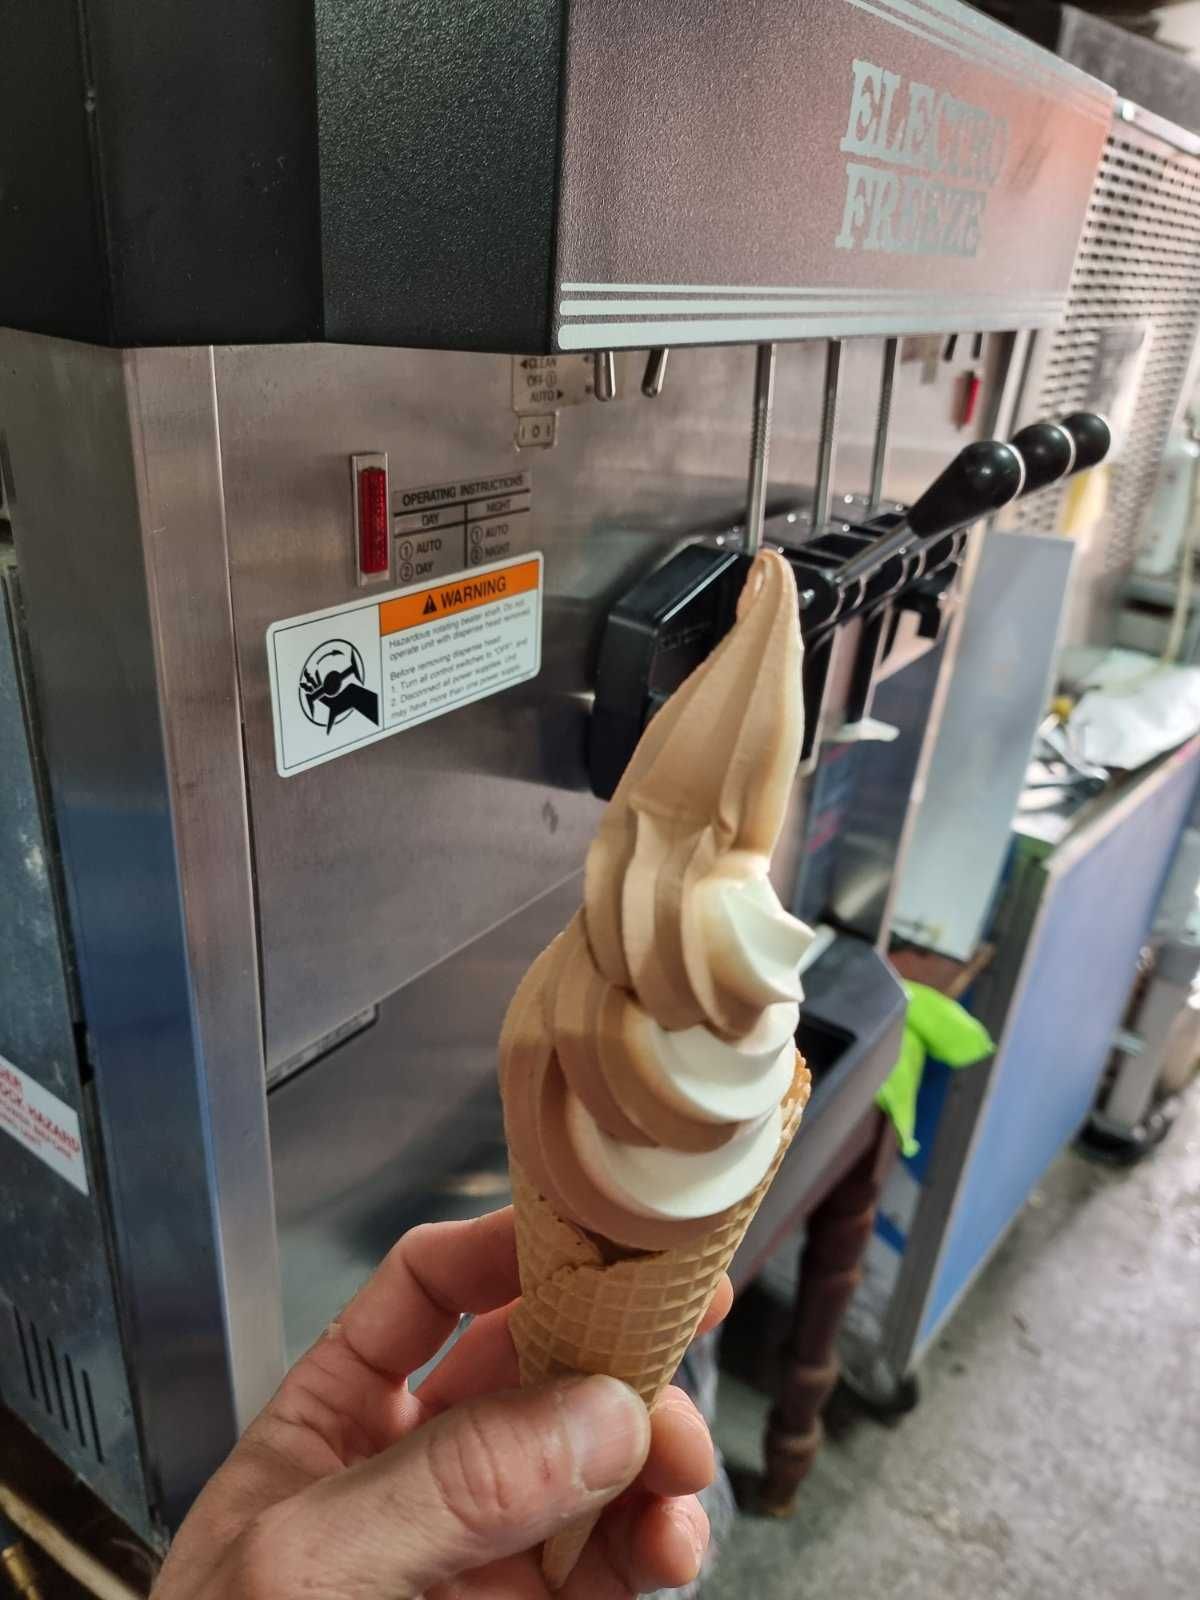 ice cream machine ELECTRO FREEZE(USA) фрізер для морозива мороженого